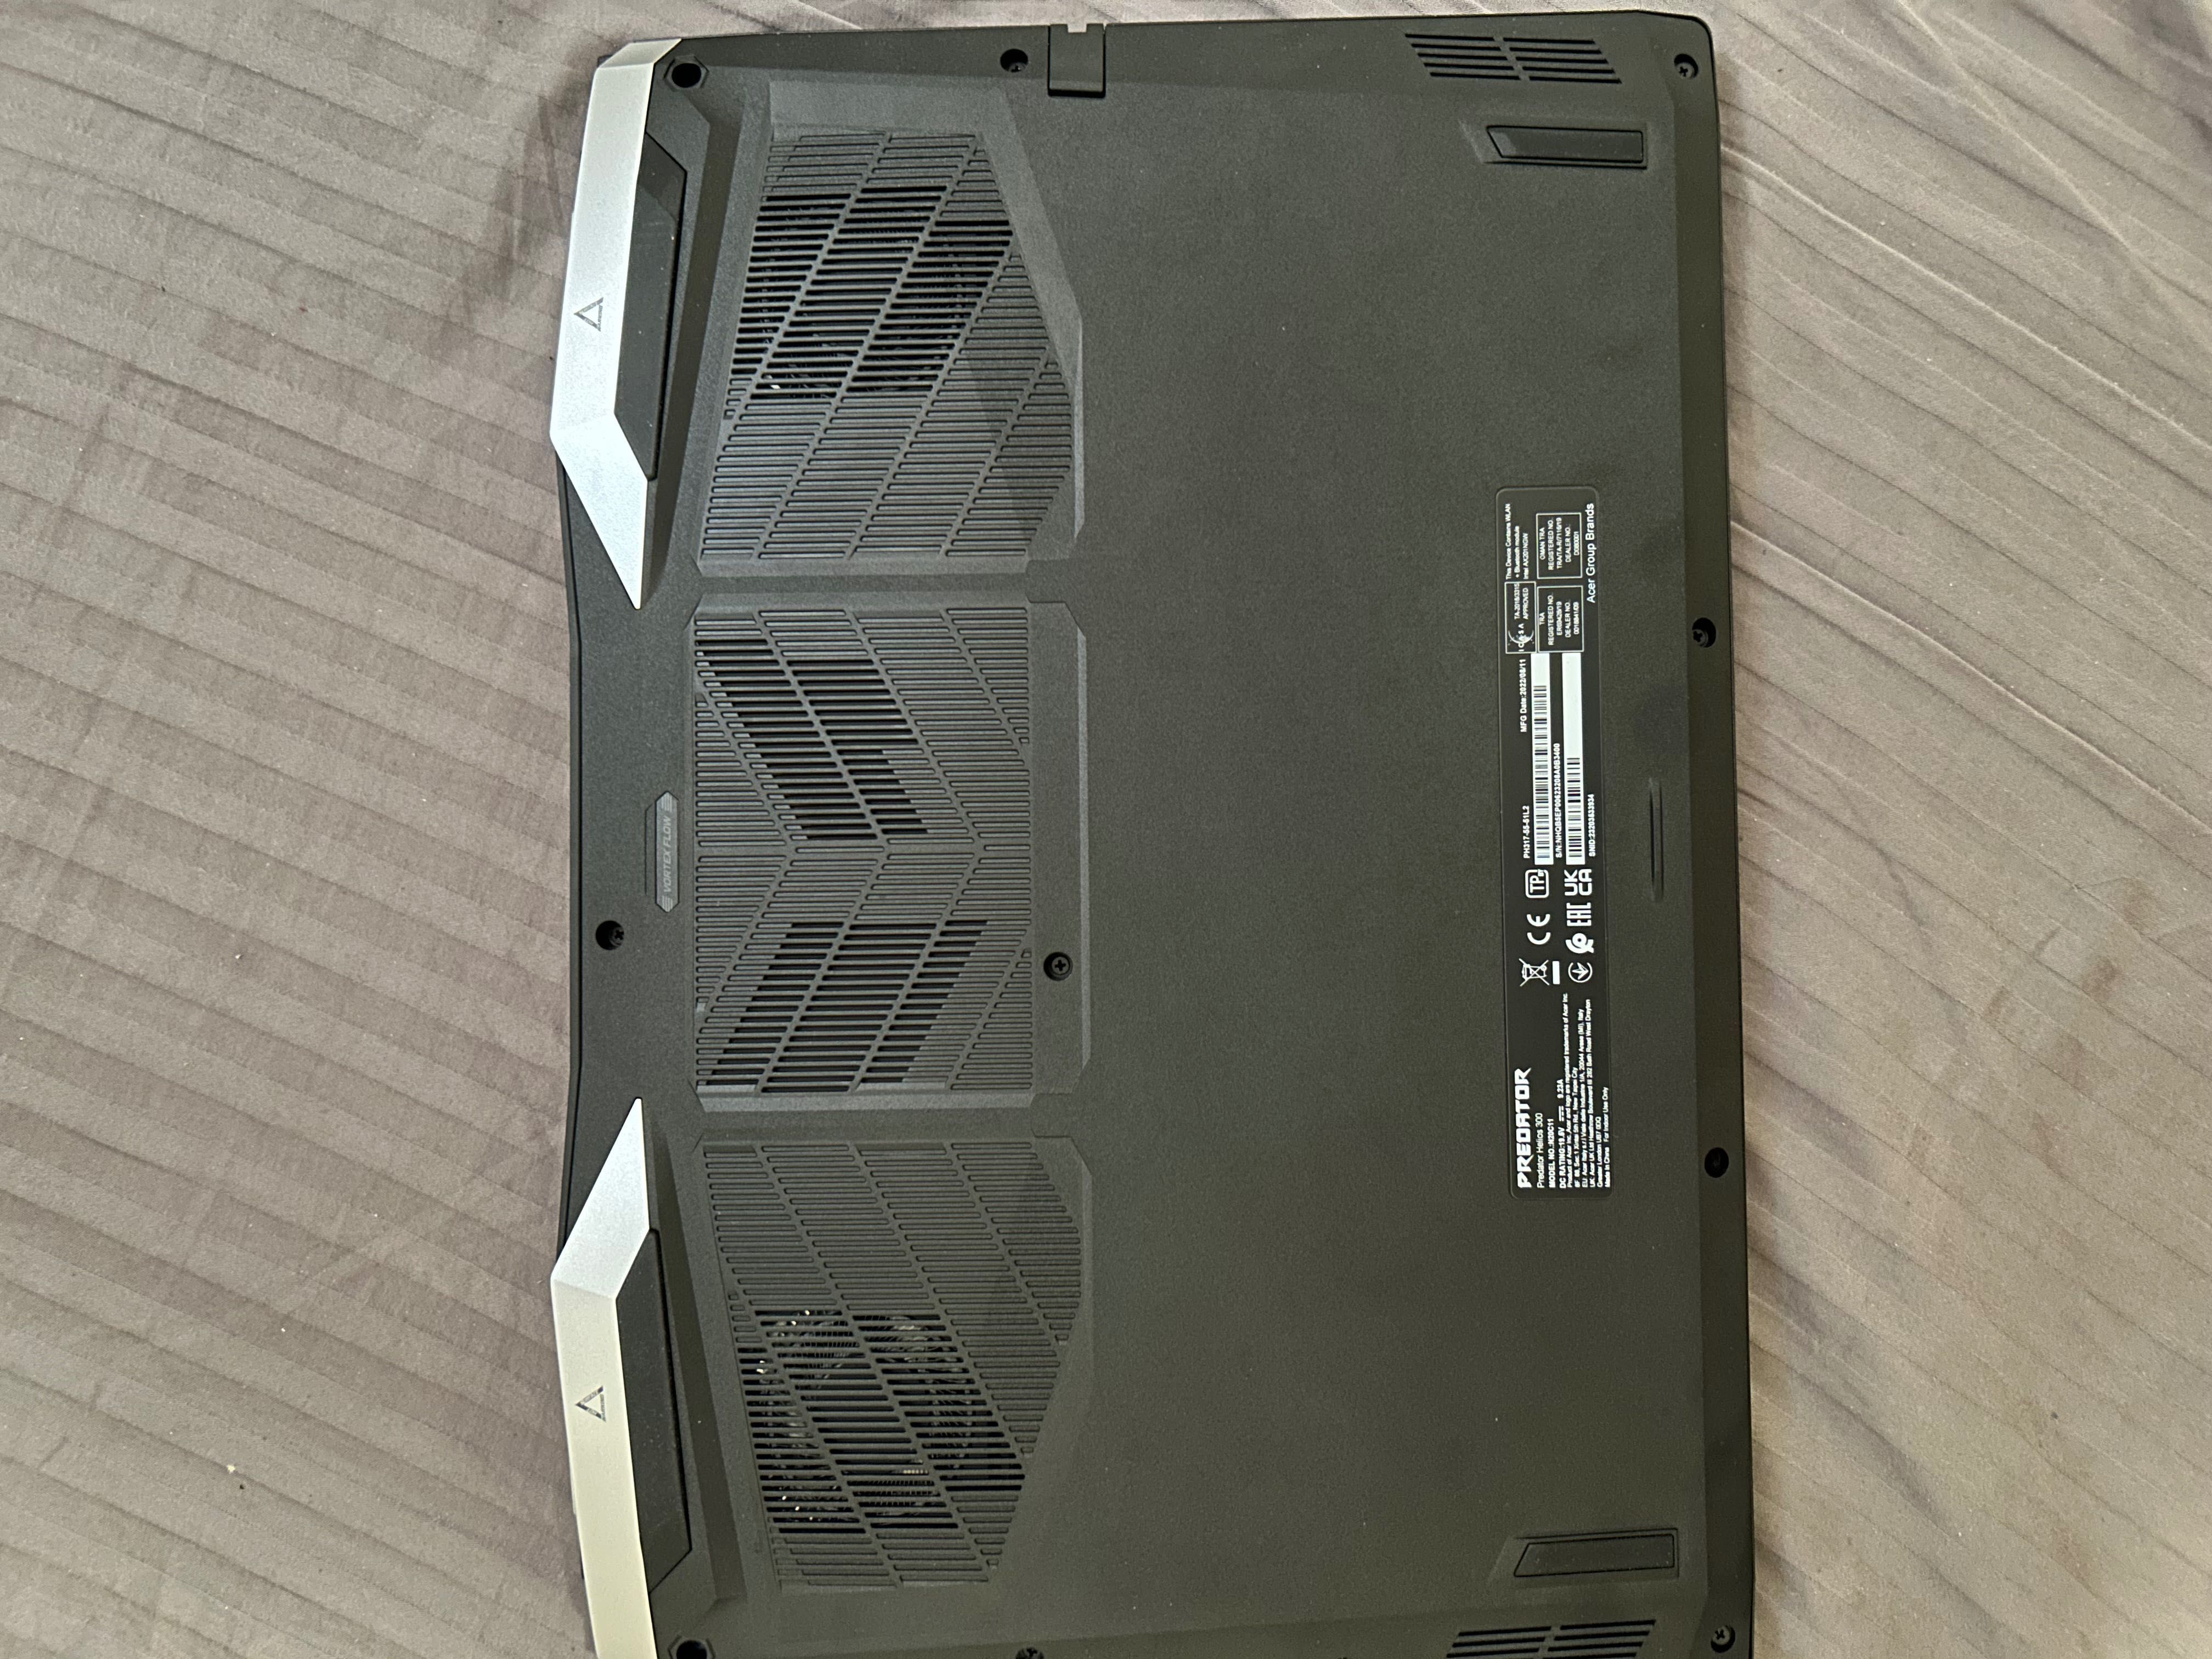 Laptop Acer Predator Helios